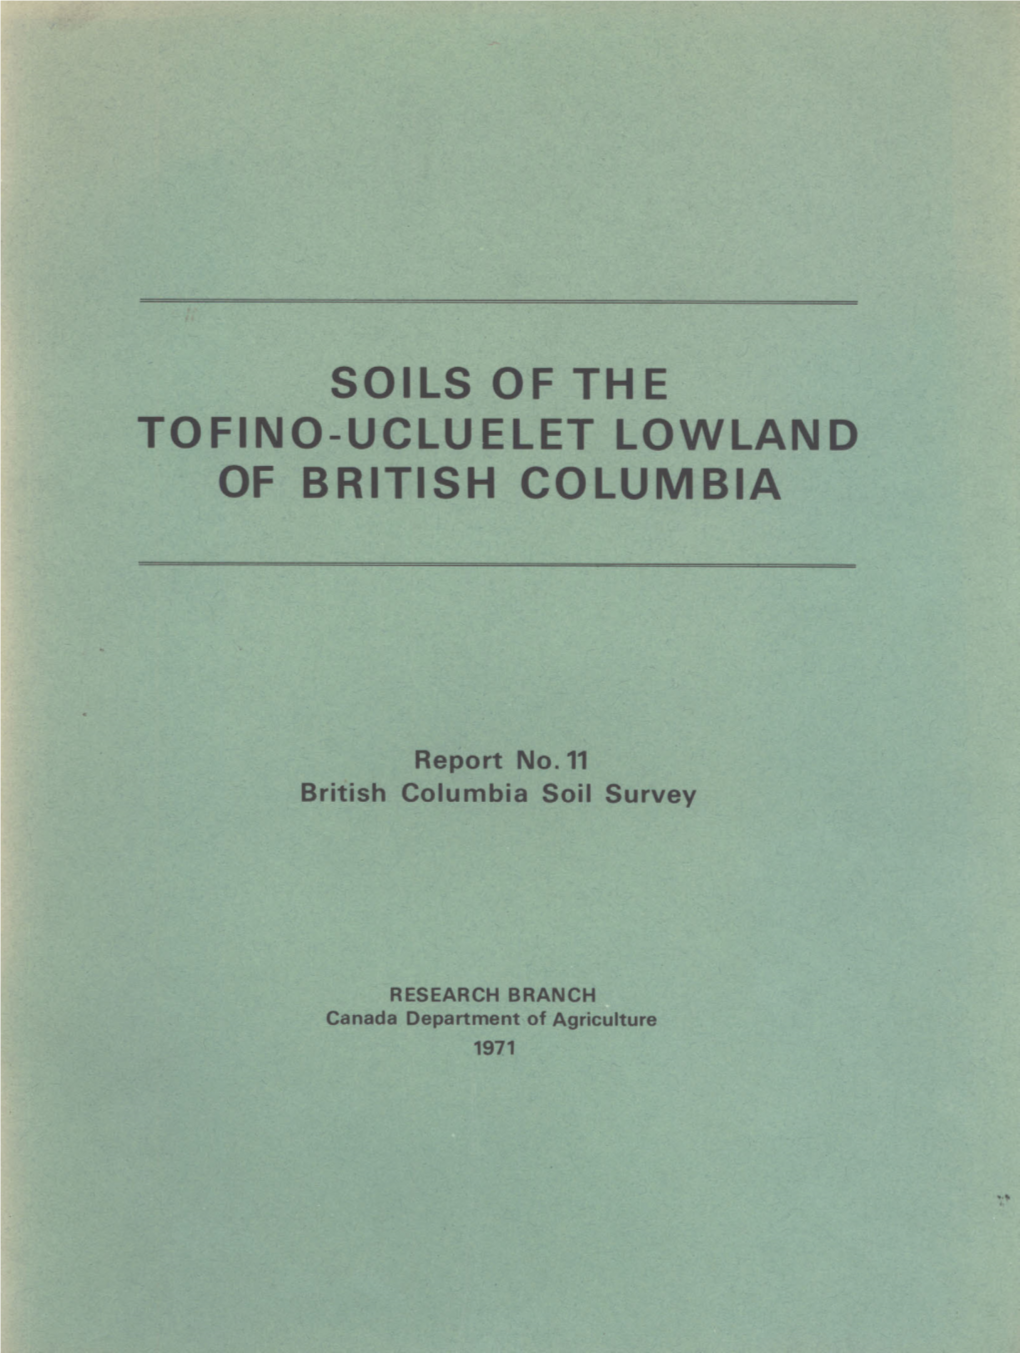 Soils of the Tofino-Ucluelet Lowland of British Columbia